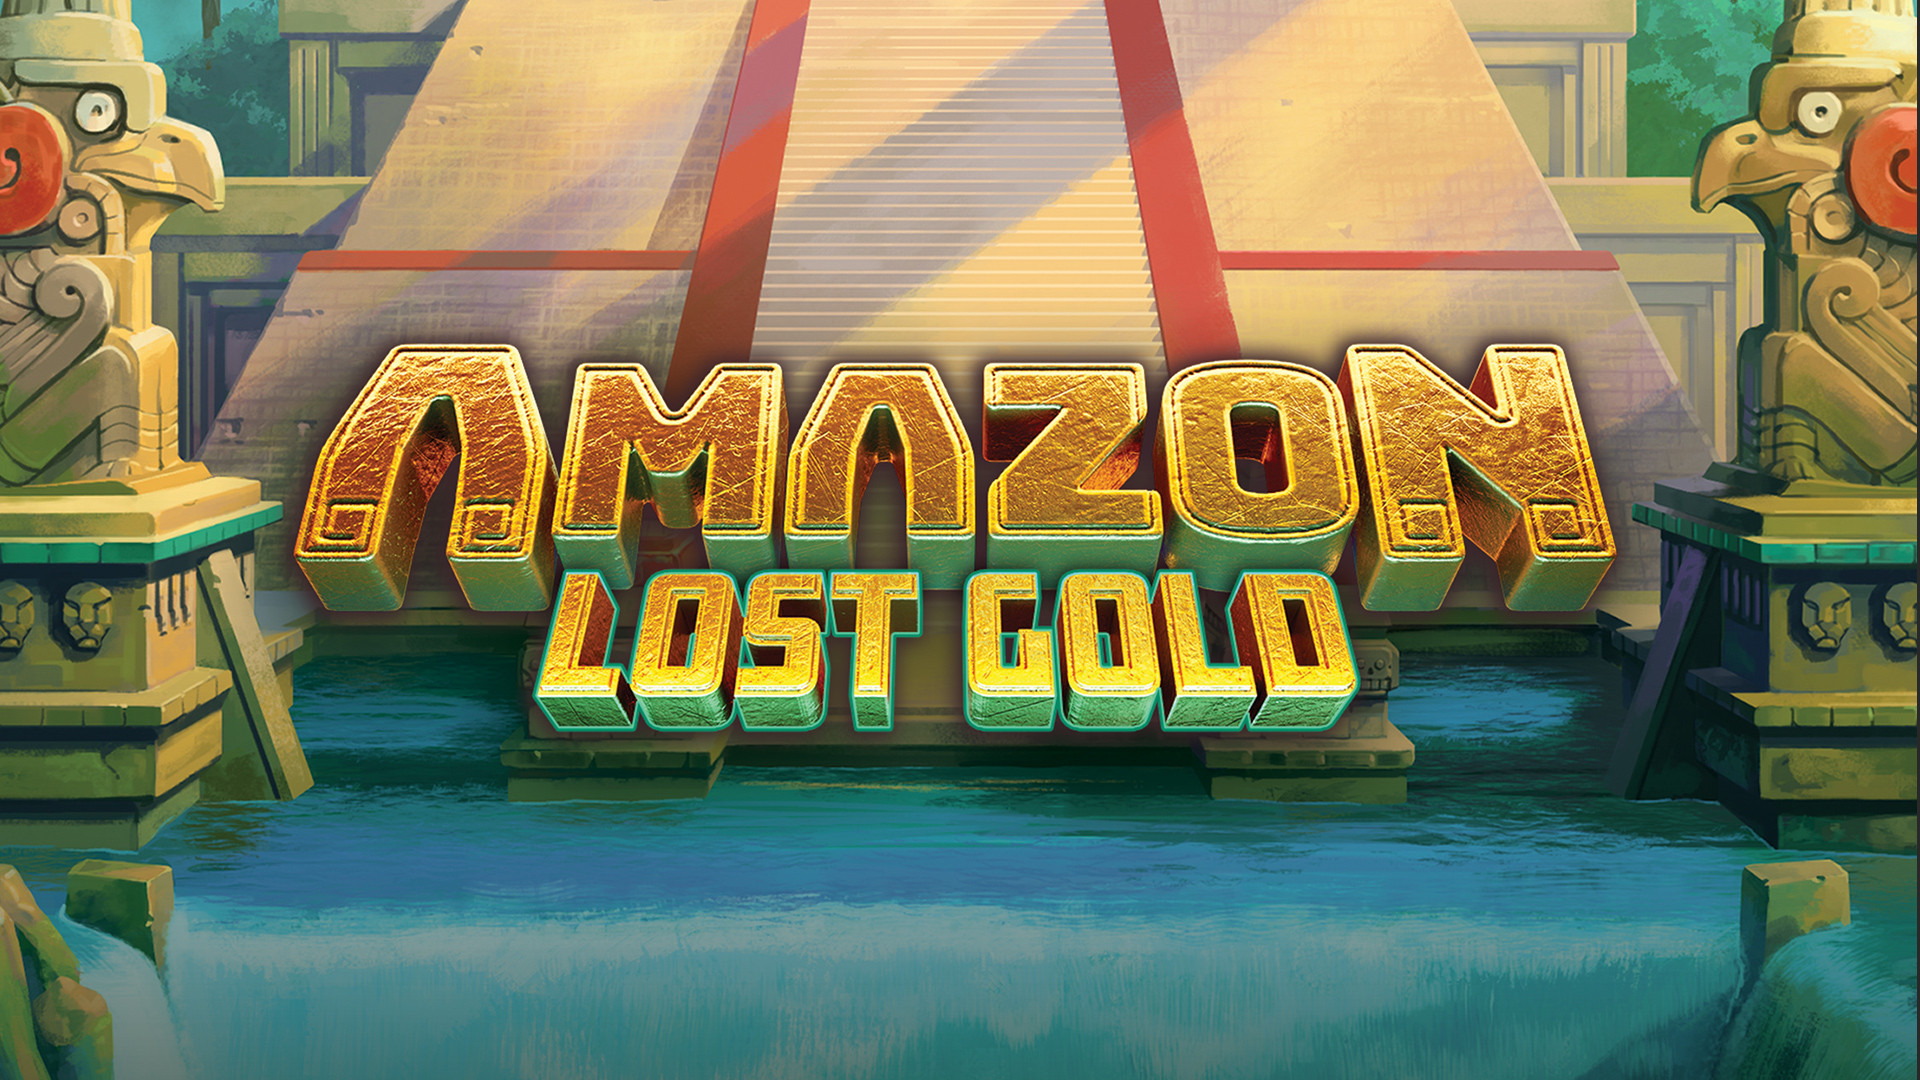 Amazon Lost Gold